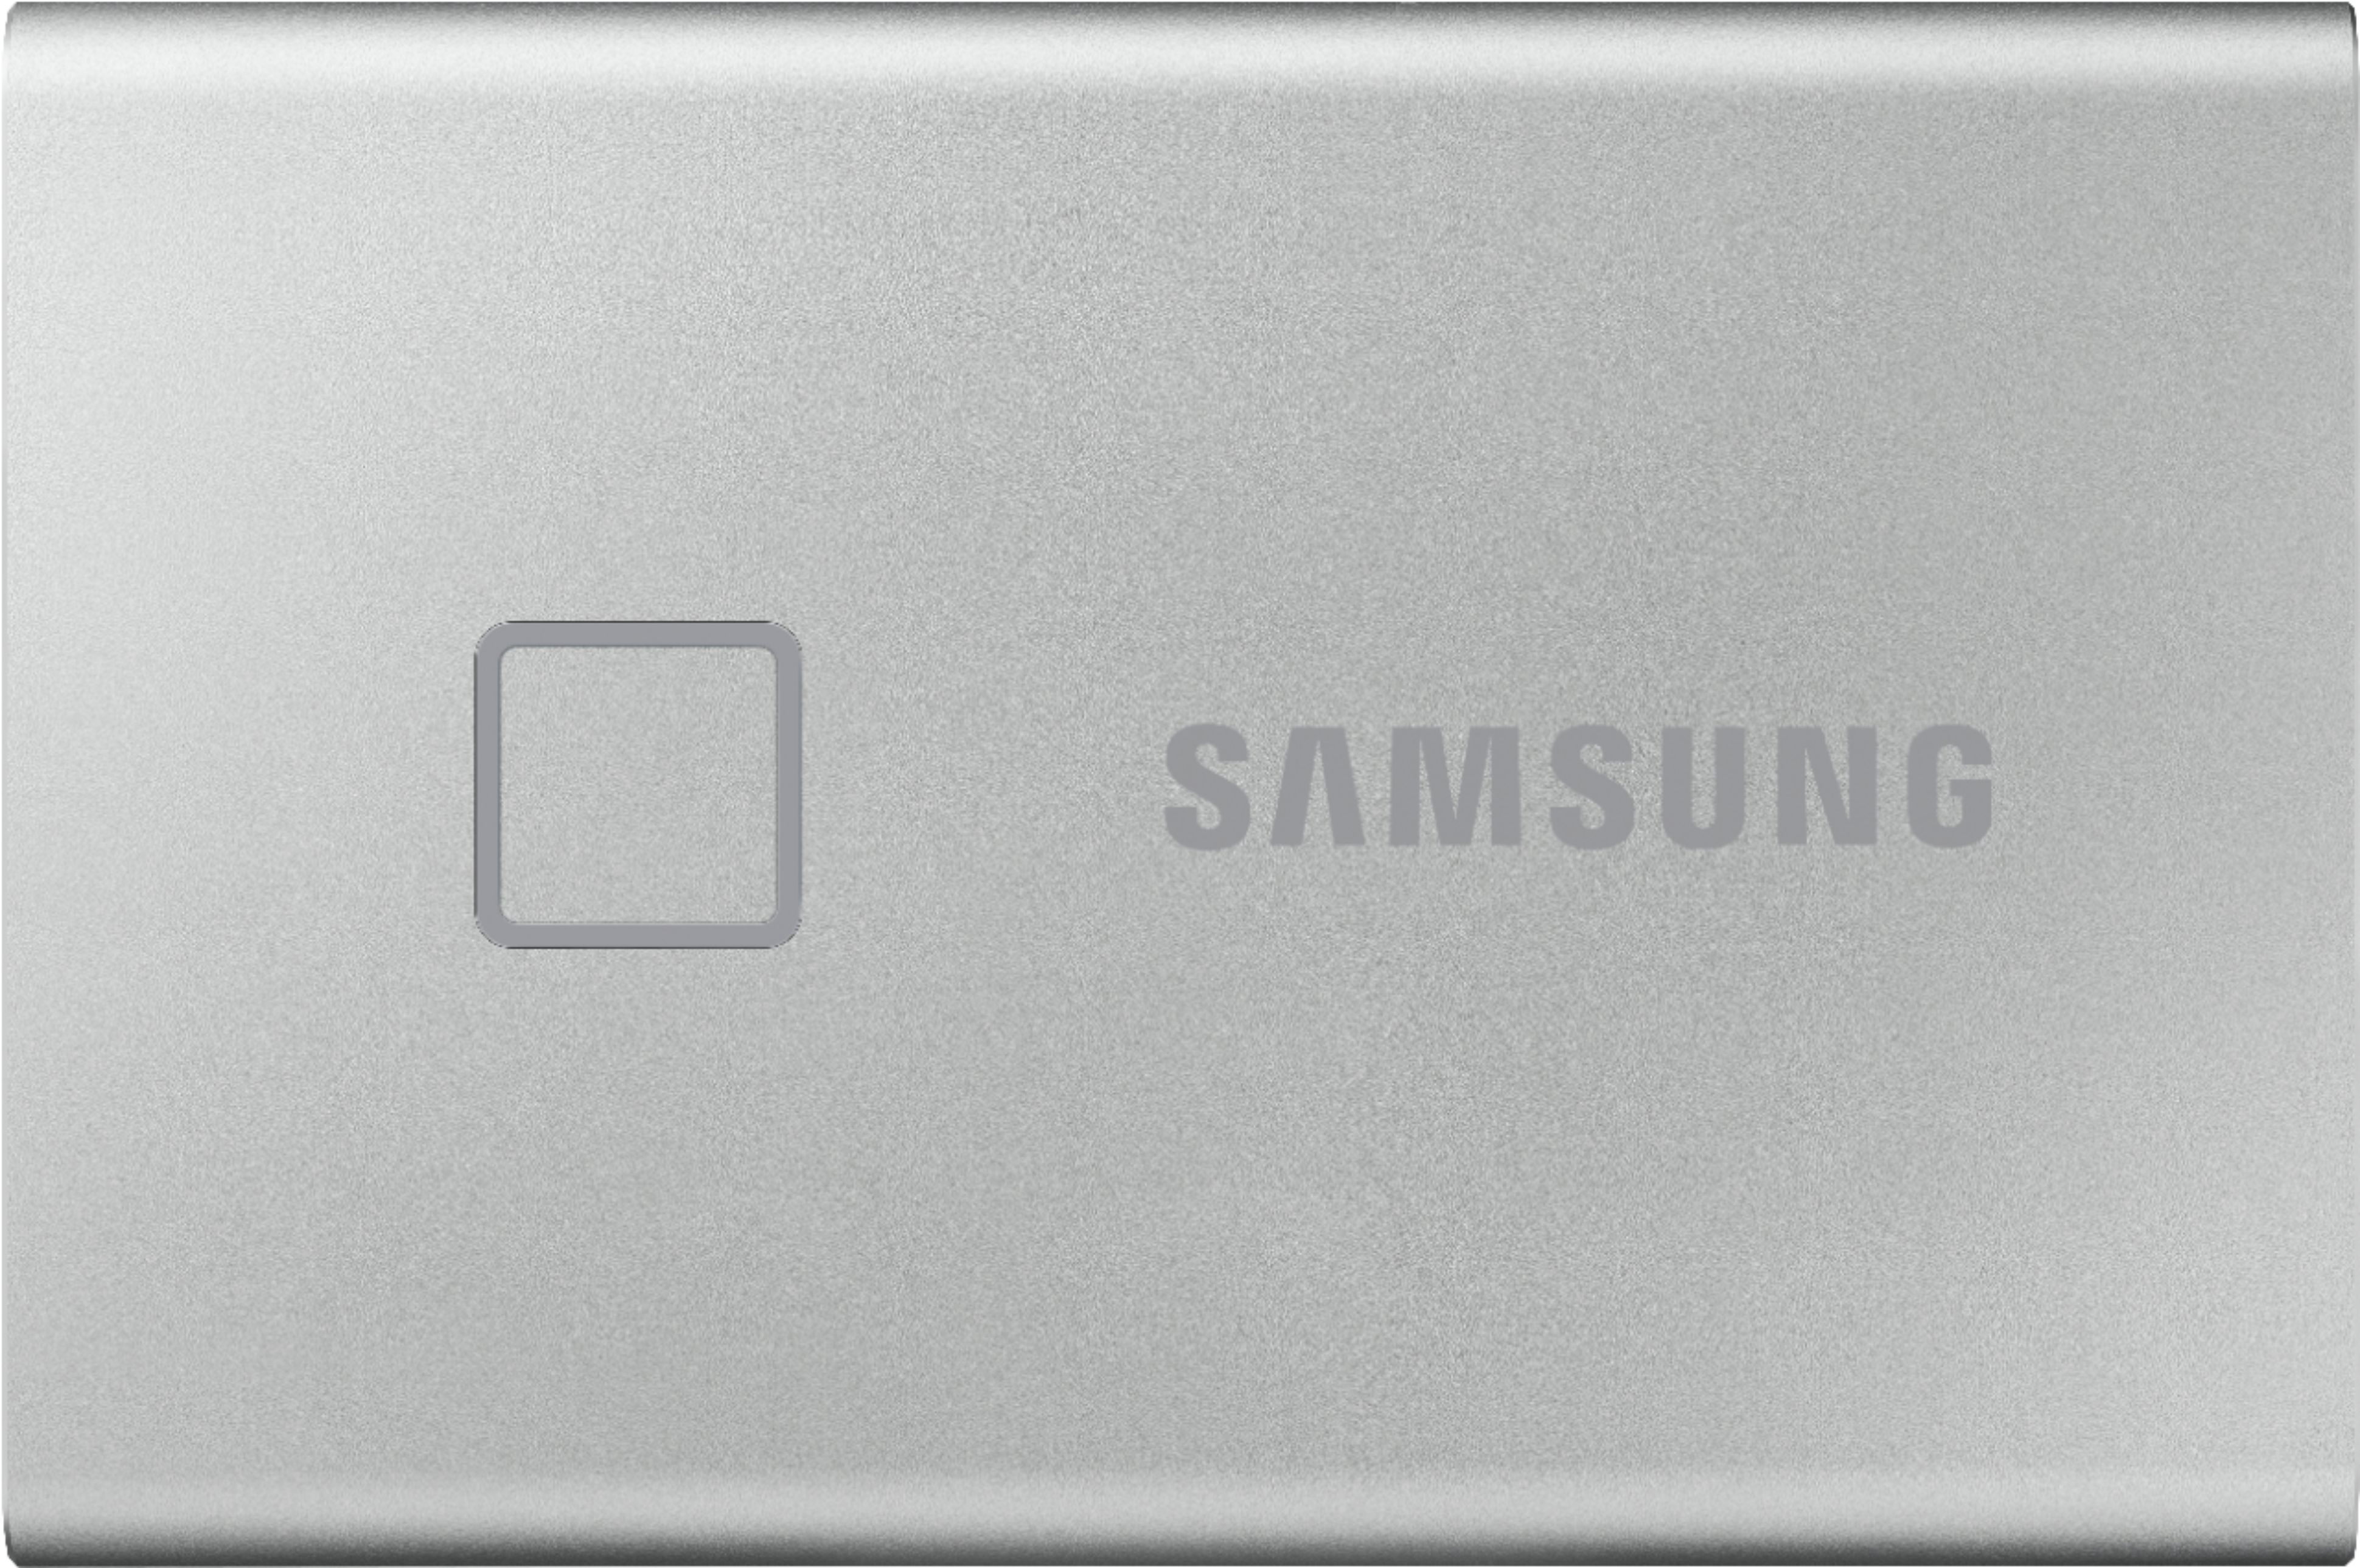 Portable SSD T7 TOUCH USB 3.2 500GB (Black) Memory & Storage - MU